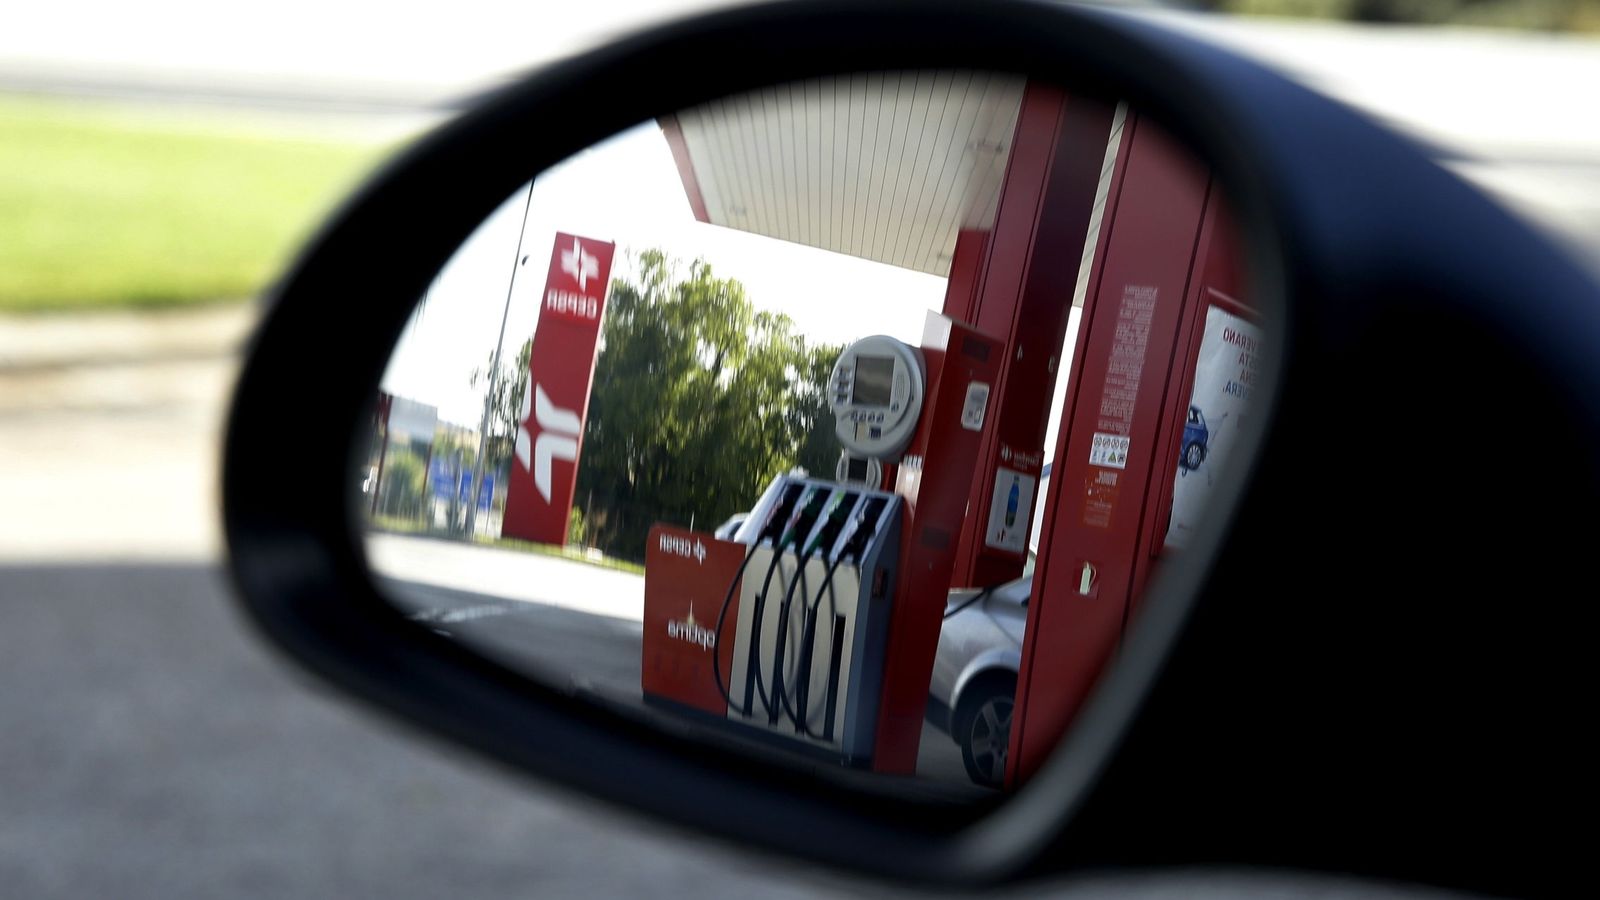 Foto: Una gasolinera se refleja en un espejo. (Efe)